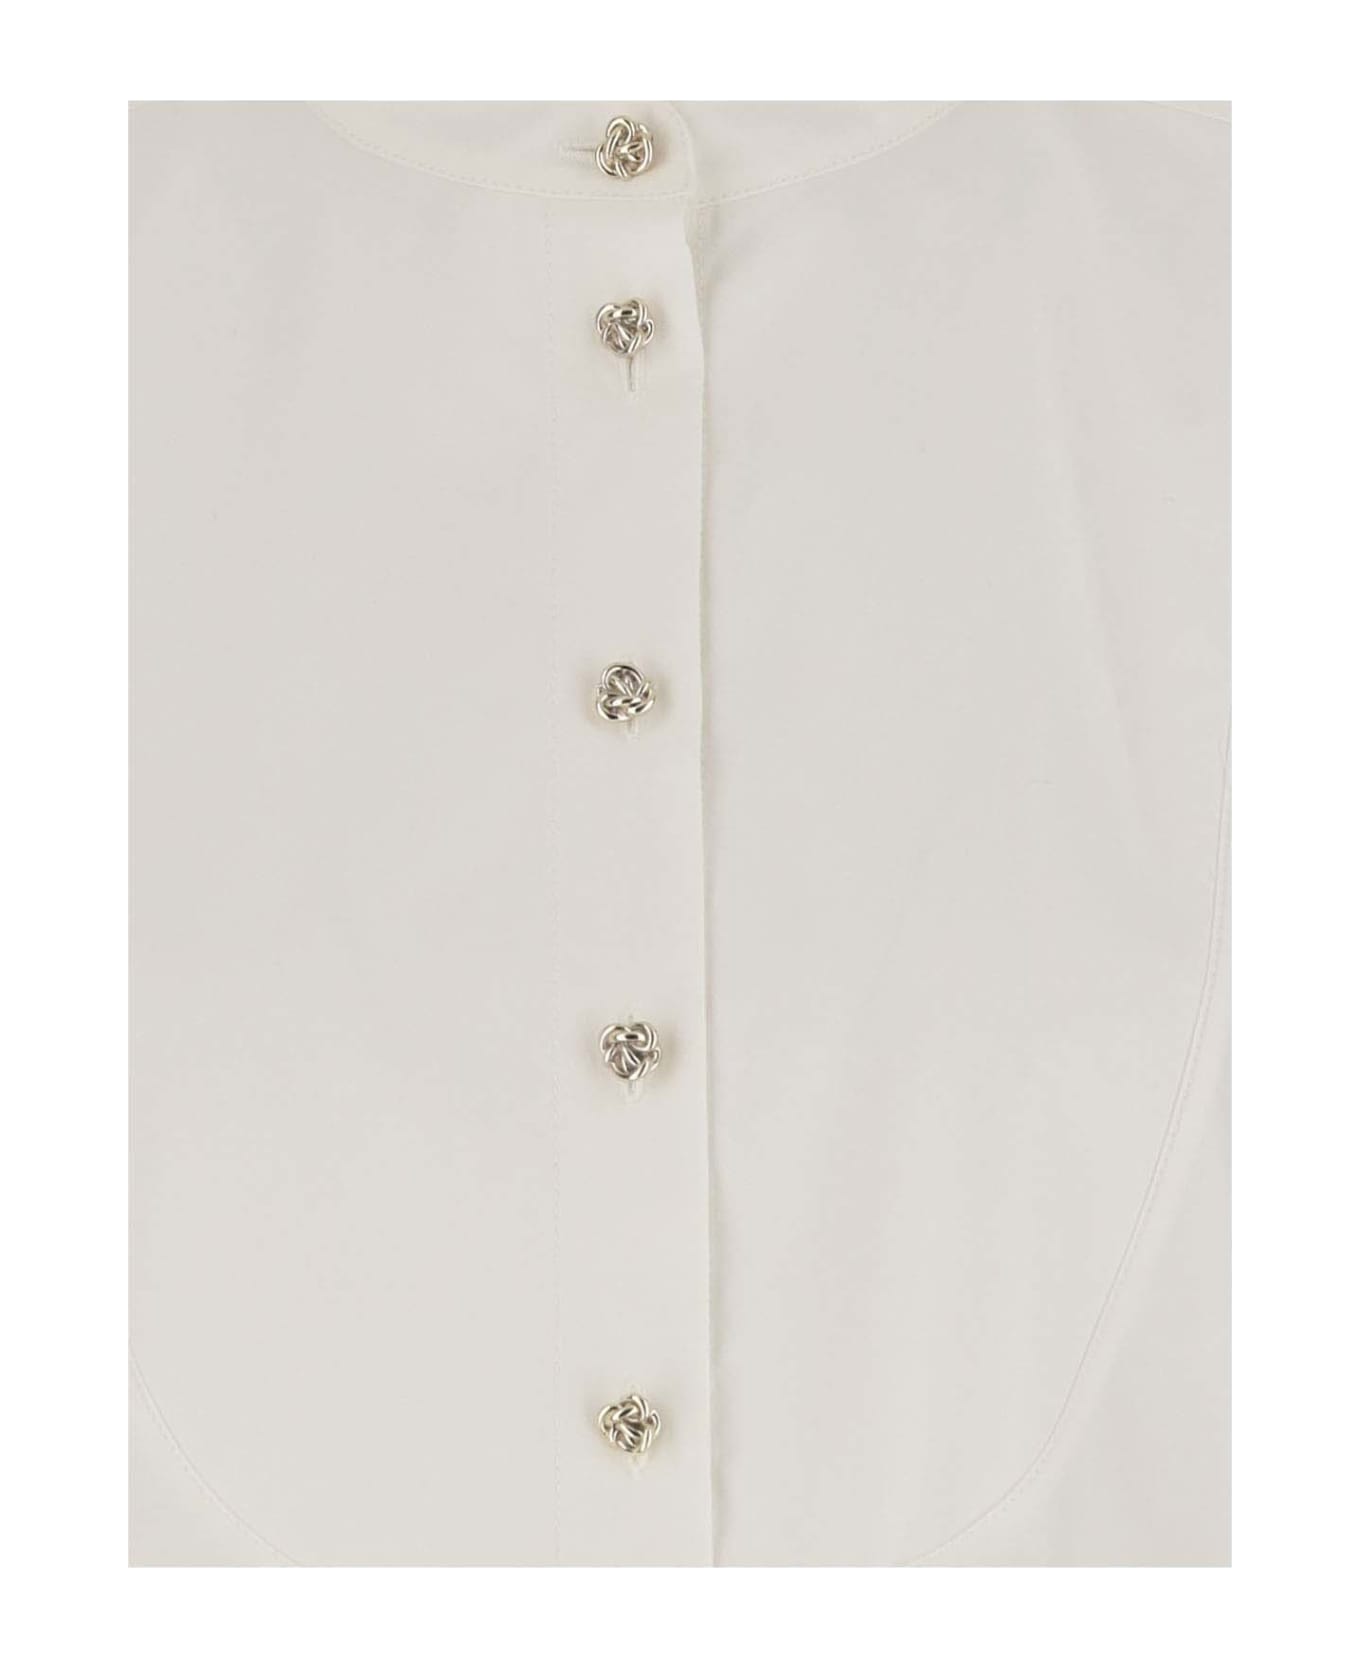 Chloé Cotton Shirt - White